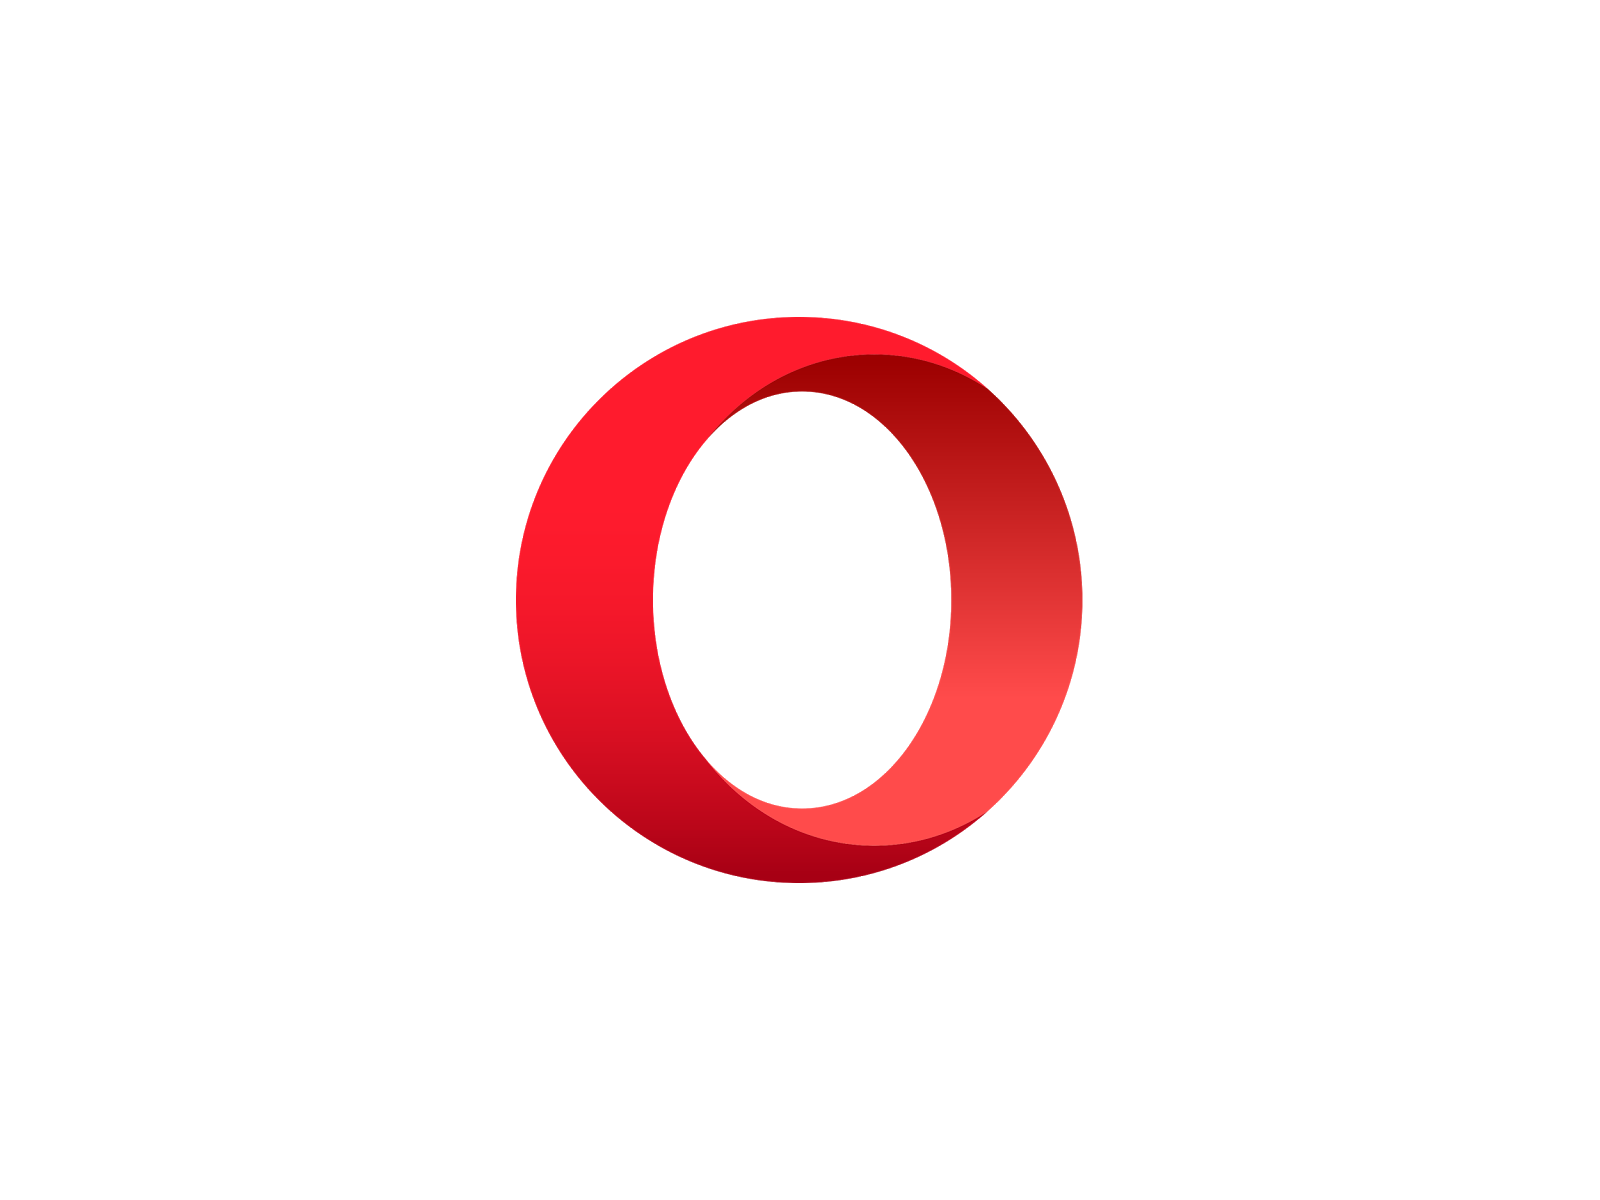 Circle Area Red, Opera Logo P